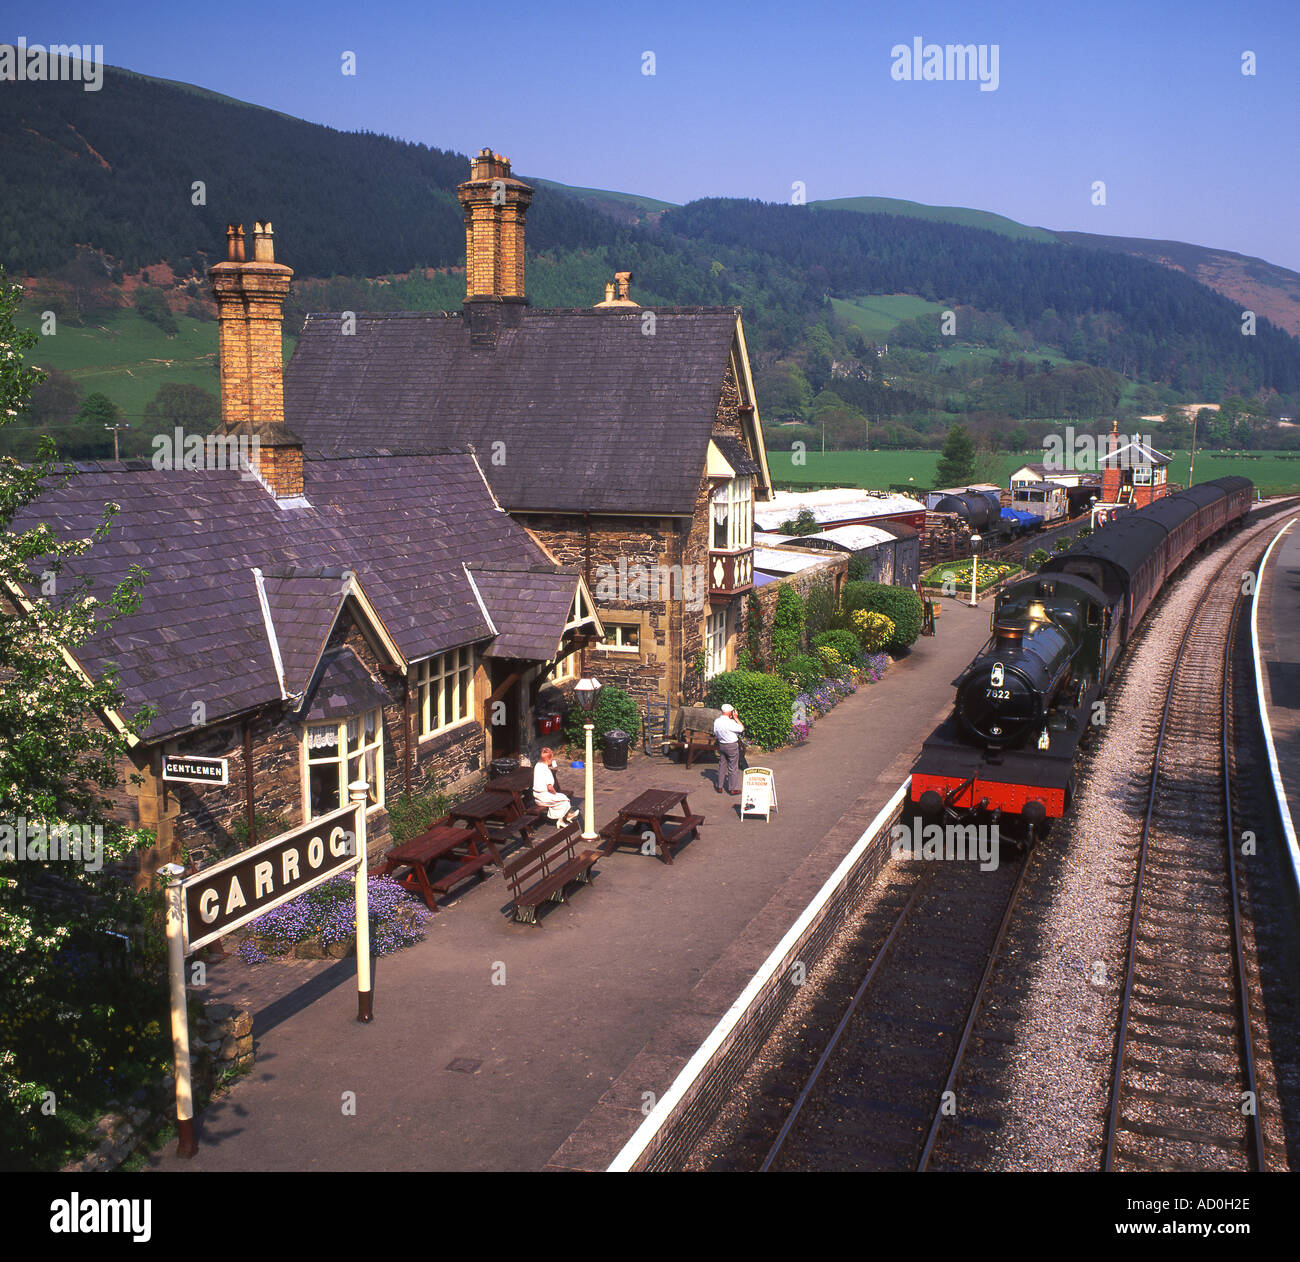 Steam Locomotive 7822 Foxcote Manor at Carrog Station Llangollen Railway Vale of Llangollen Powys Wales UK Stock Photo